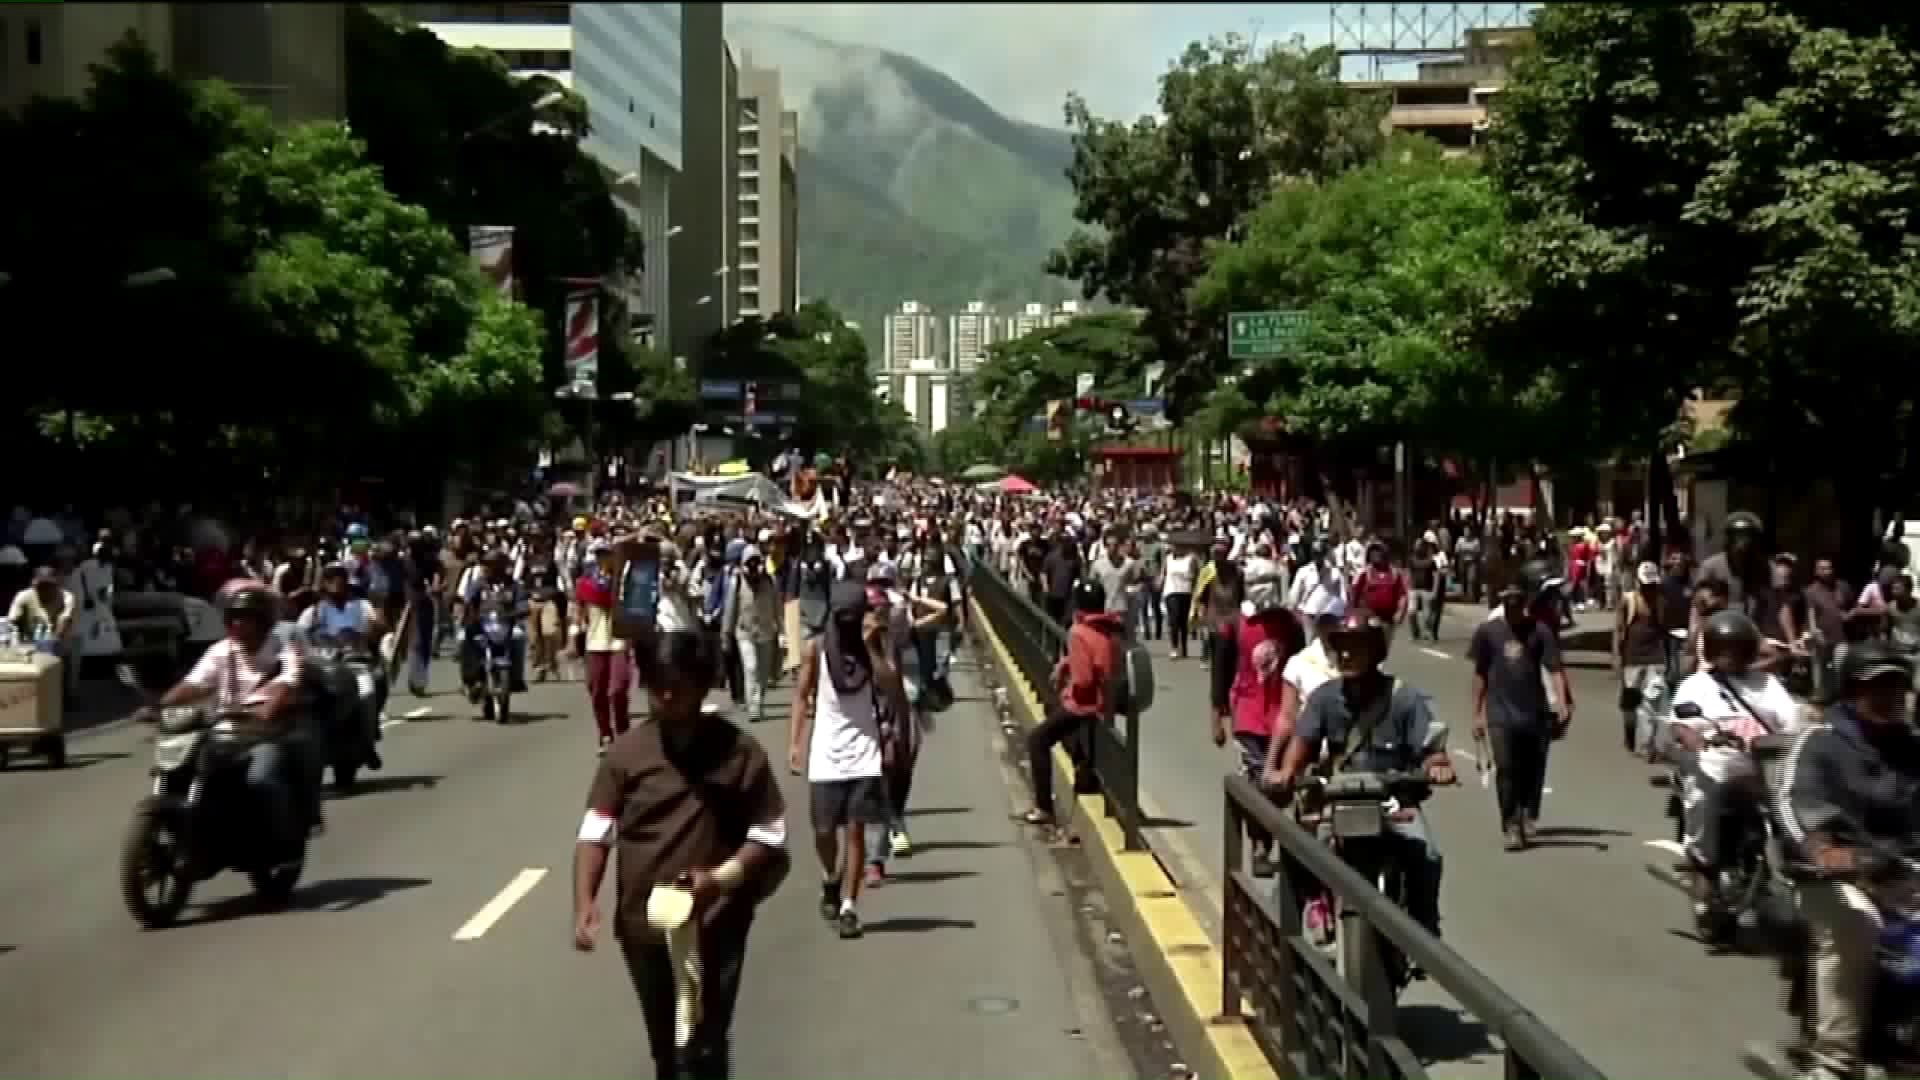 Al Pedrique on Venezuela